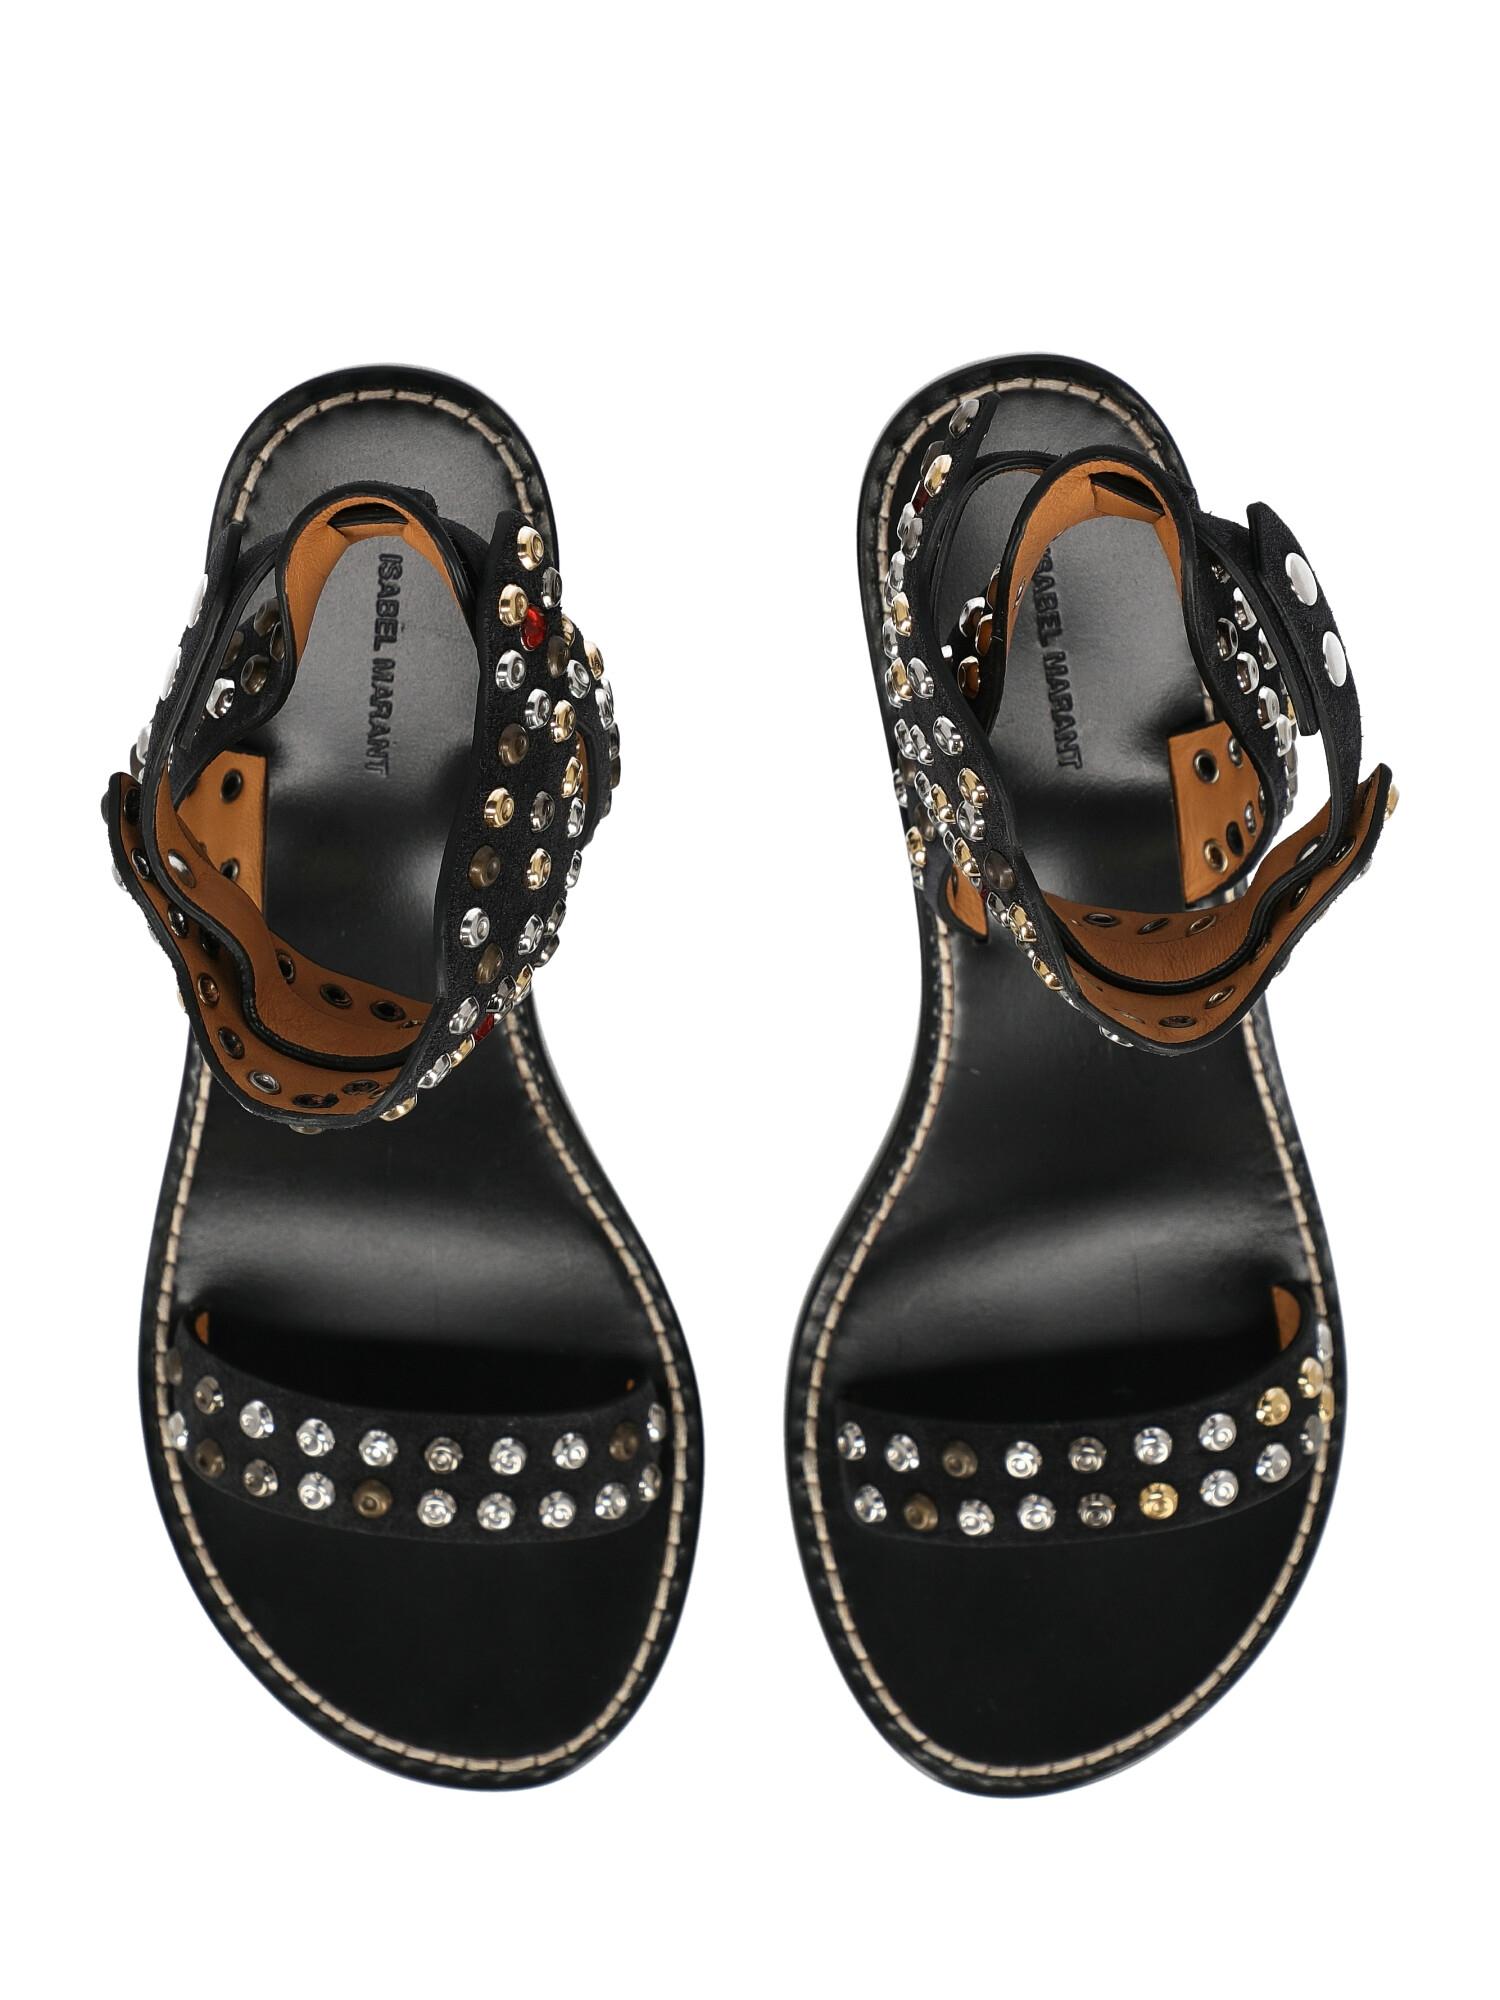 Isabel Marant Woman Sandals Black Leather IT 37 For Sale 2